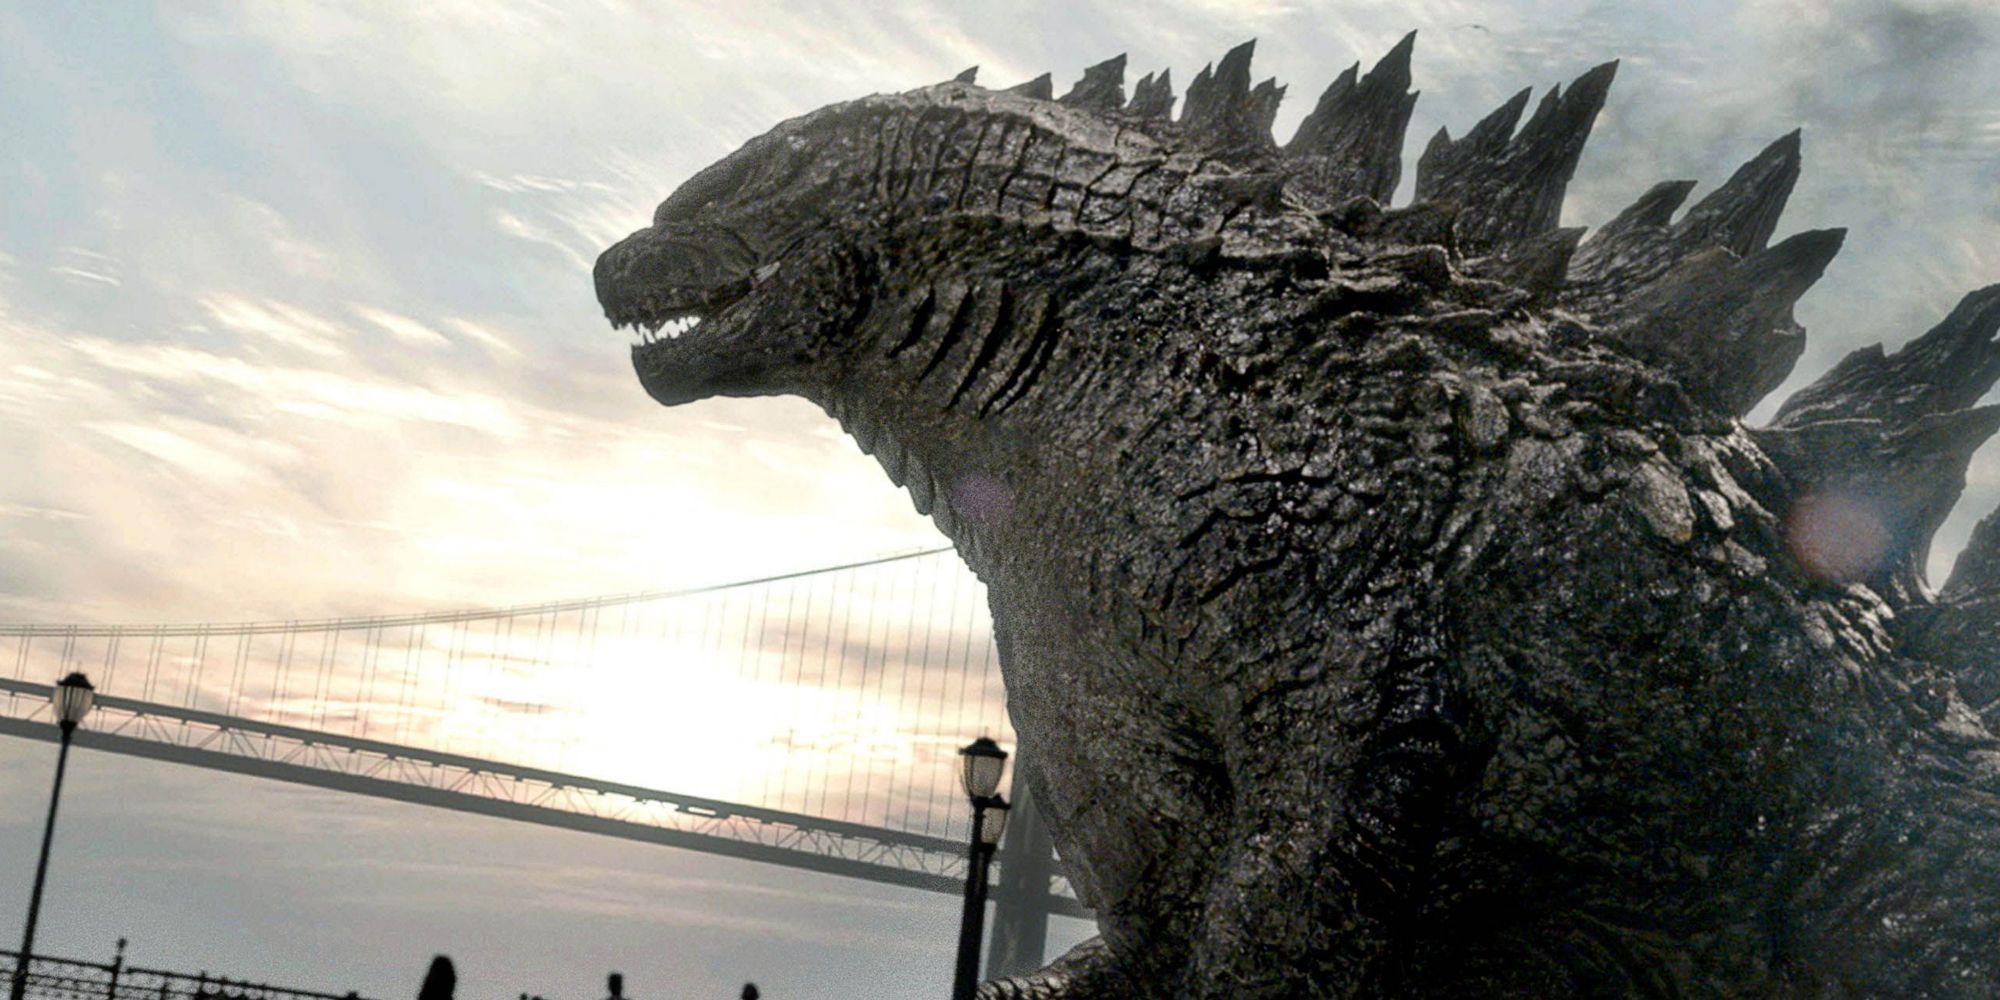 Godzilla lumbers to the ocean in Godzilla (2014)